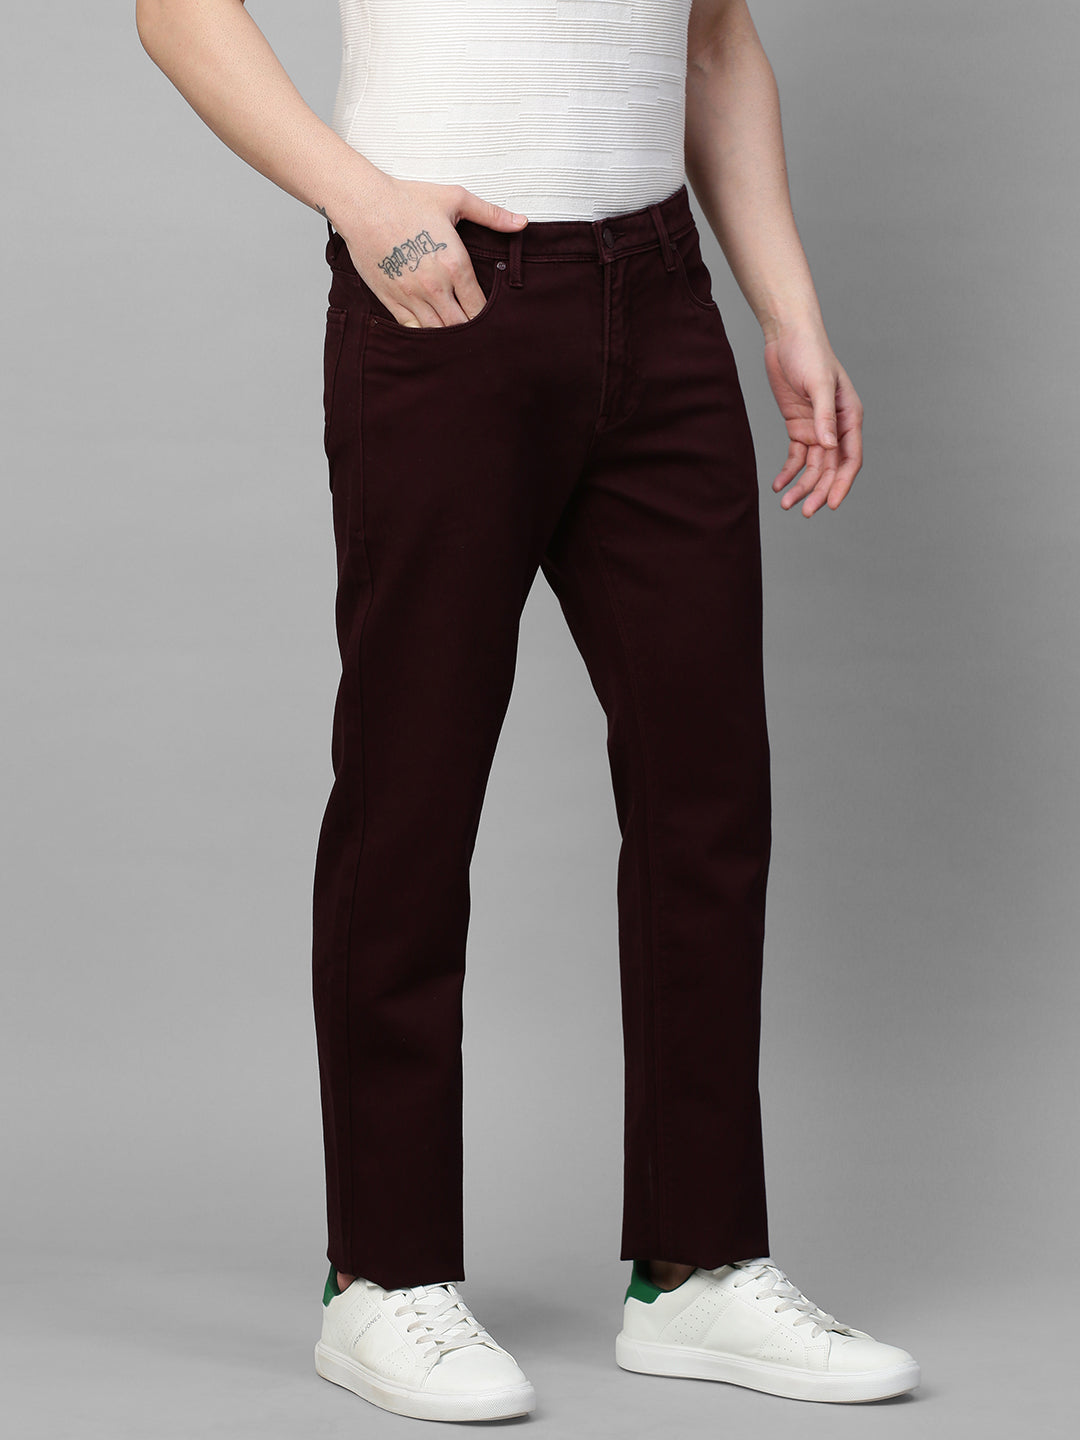 Genips Men's Wine Color Cotton Stretch Rico Slim Fit Solid 5 Pocket Trouser